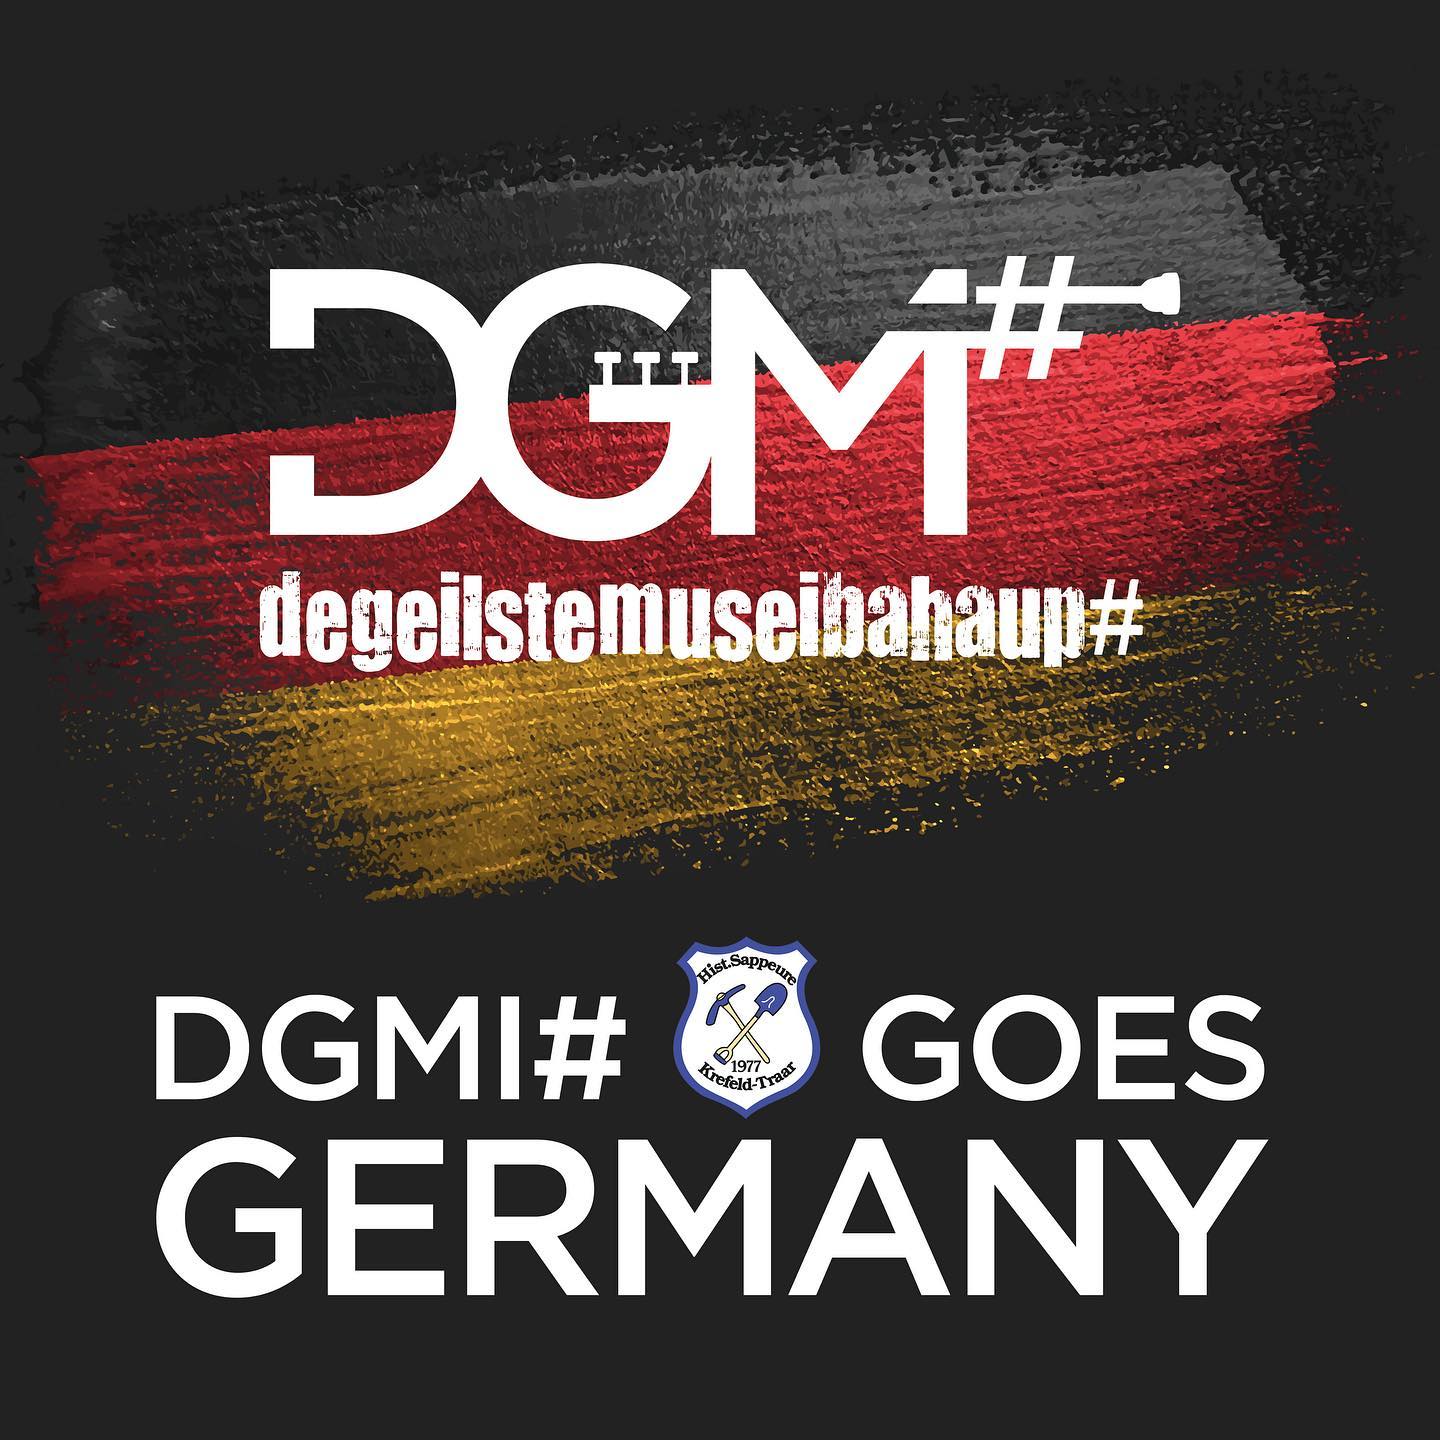 dgm goes germany